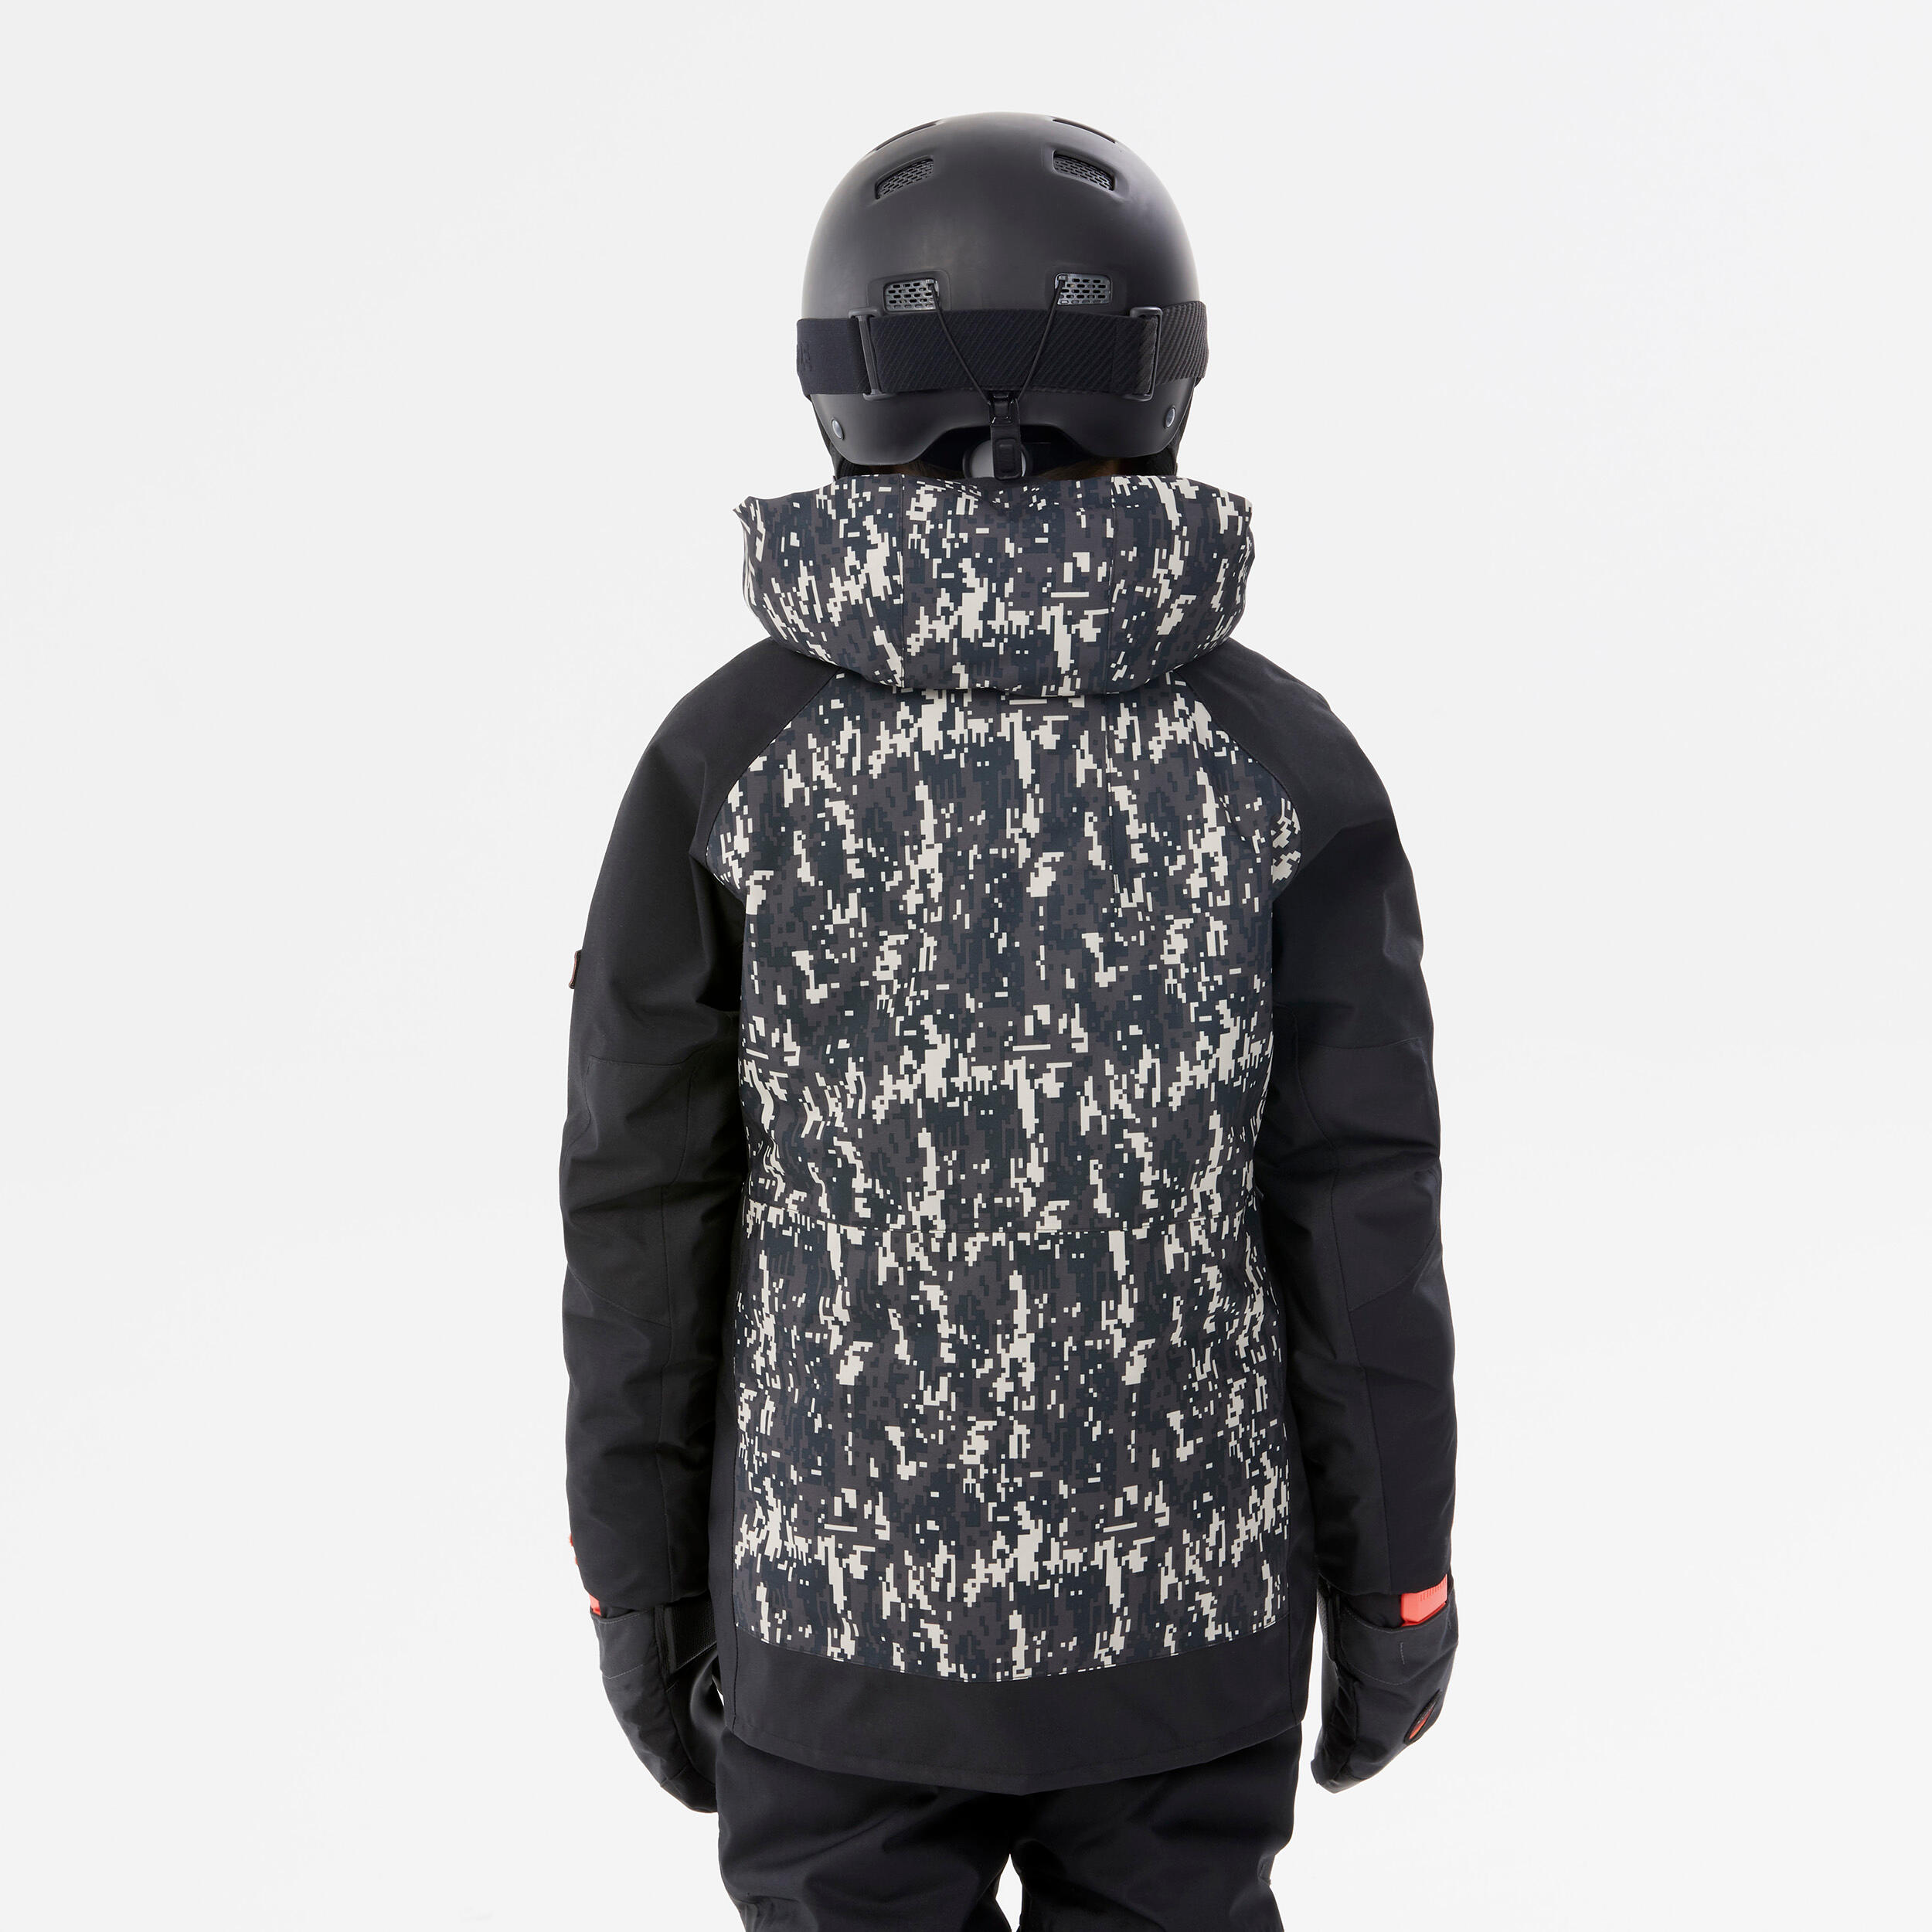 KIDS’ SNOWBOARD SNB 500 JACKET – black camouflage 5/12